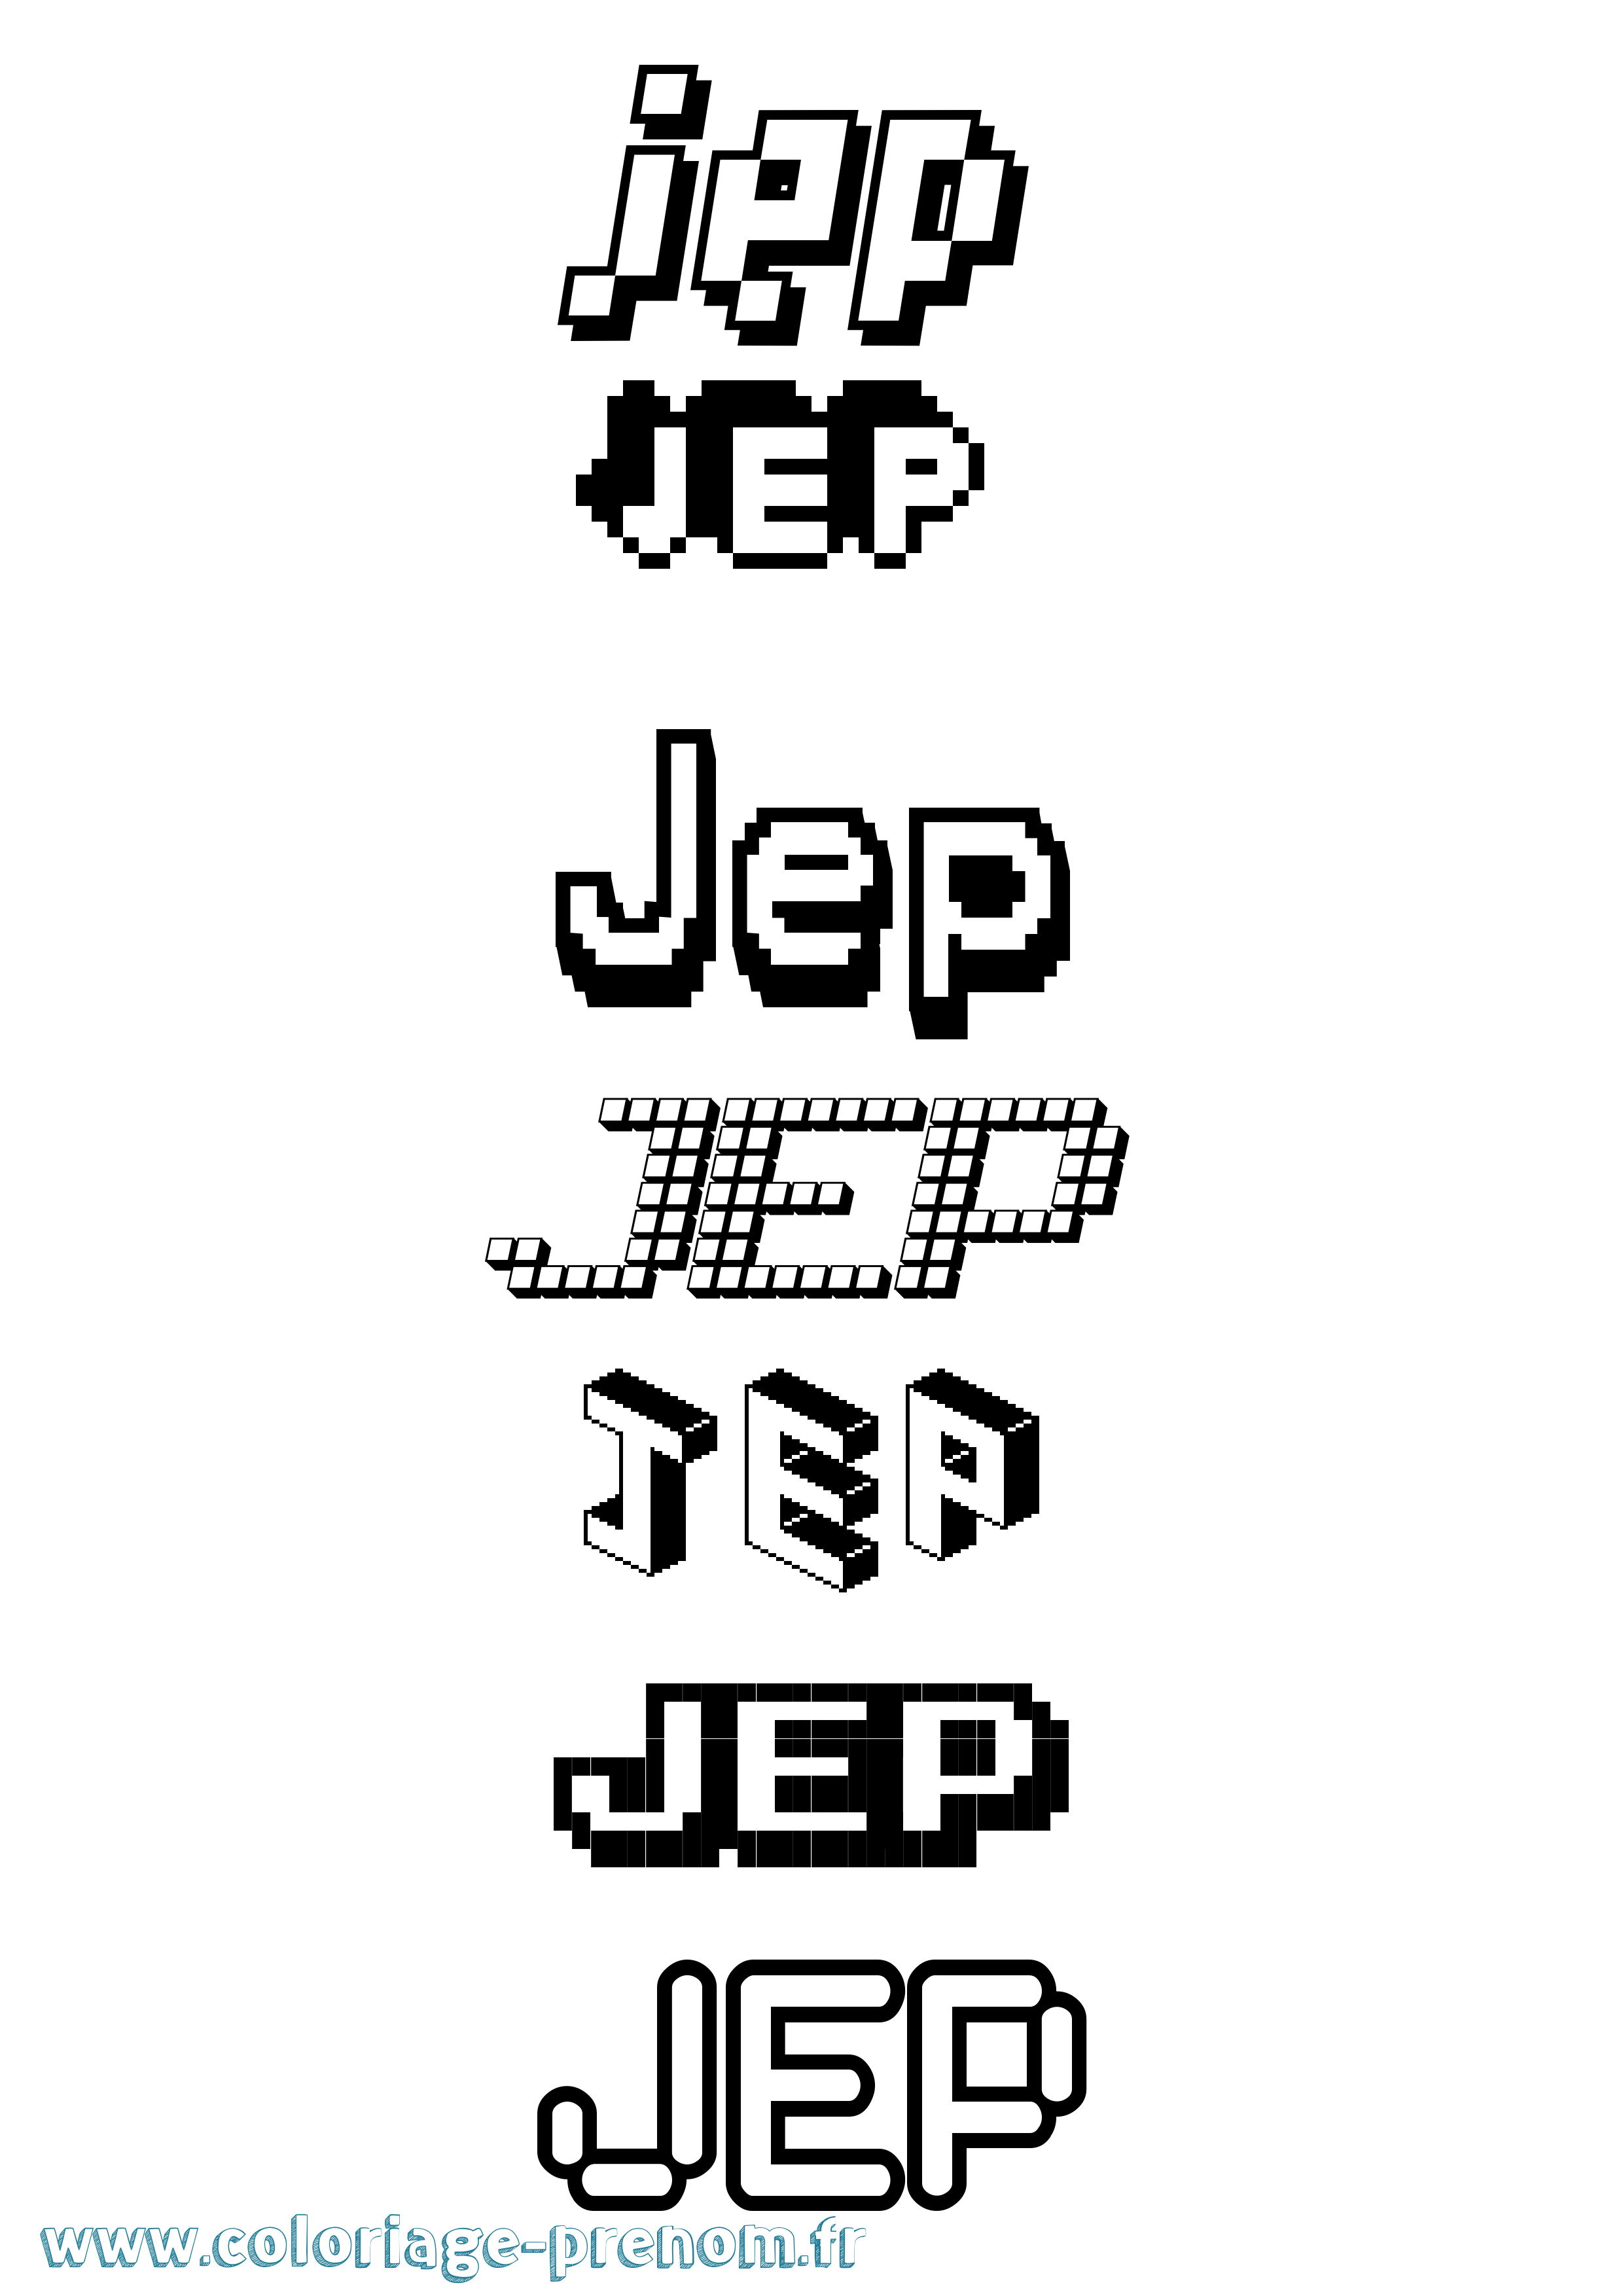 Coloriage prénom Jep Pixel